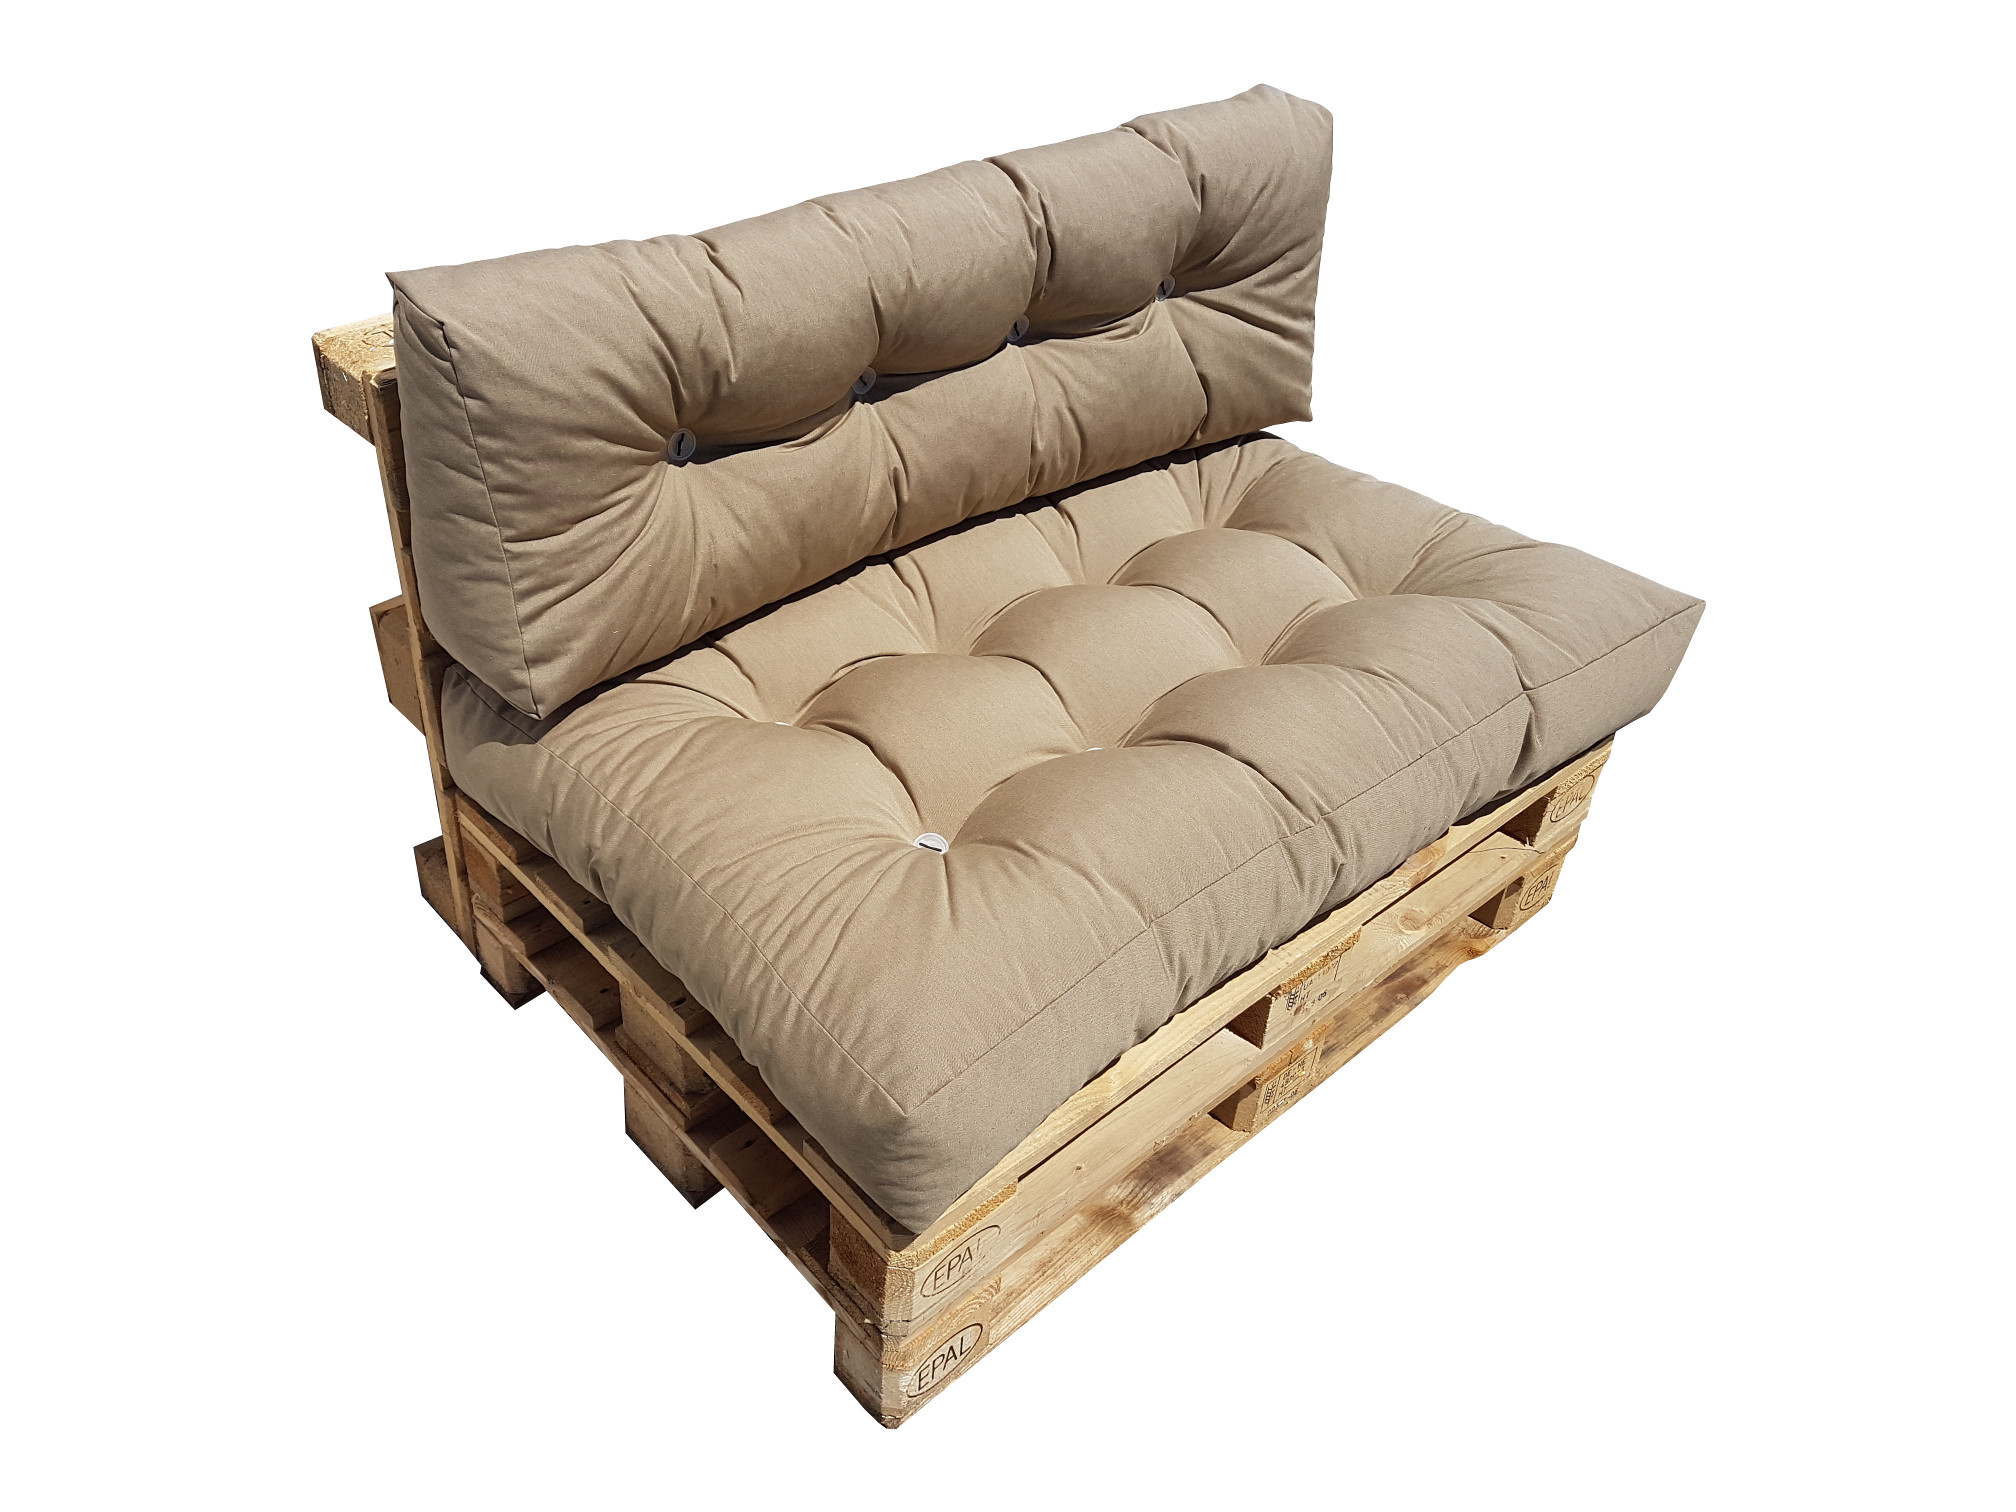 мягкие подушки для сидения на скамейку своими руками